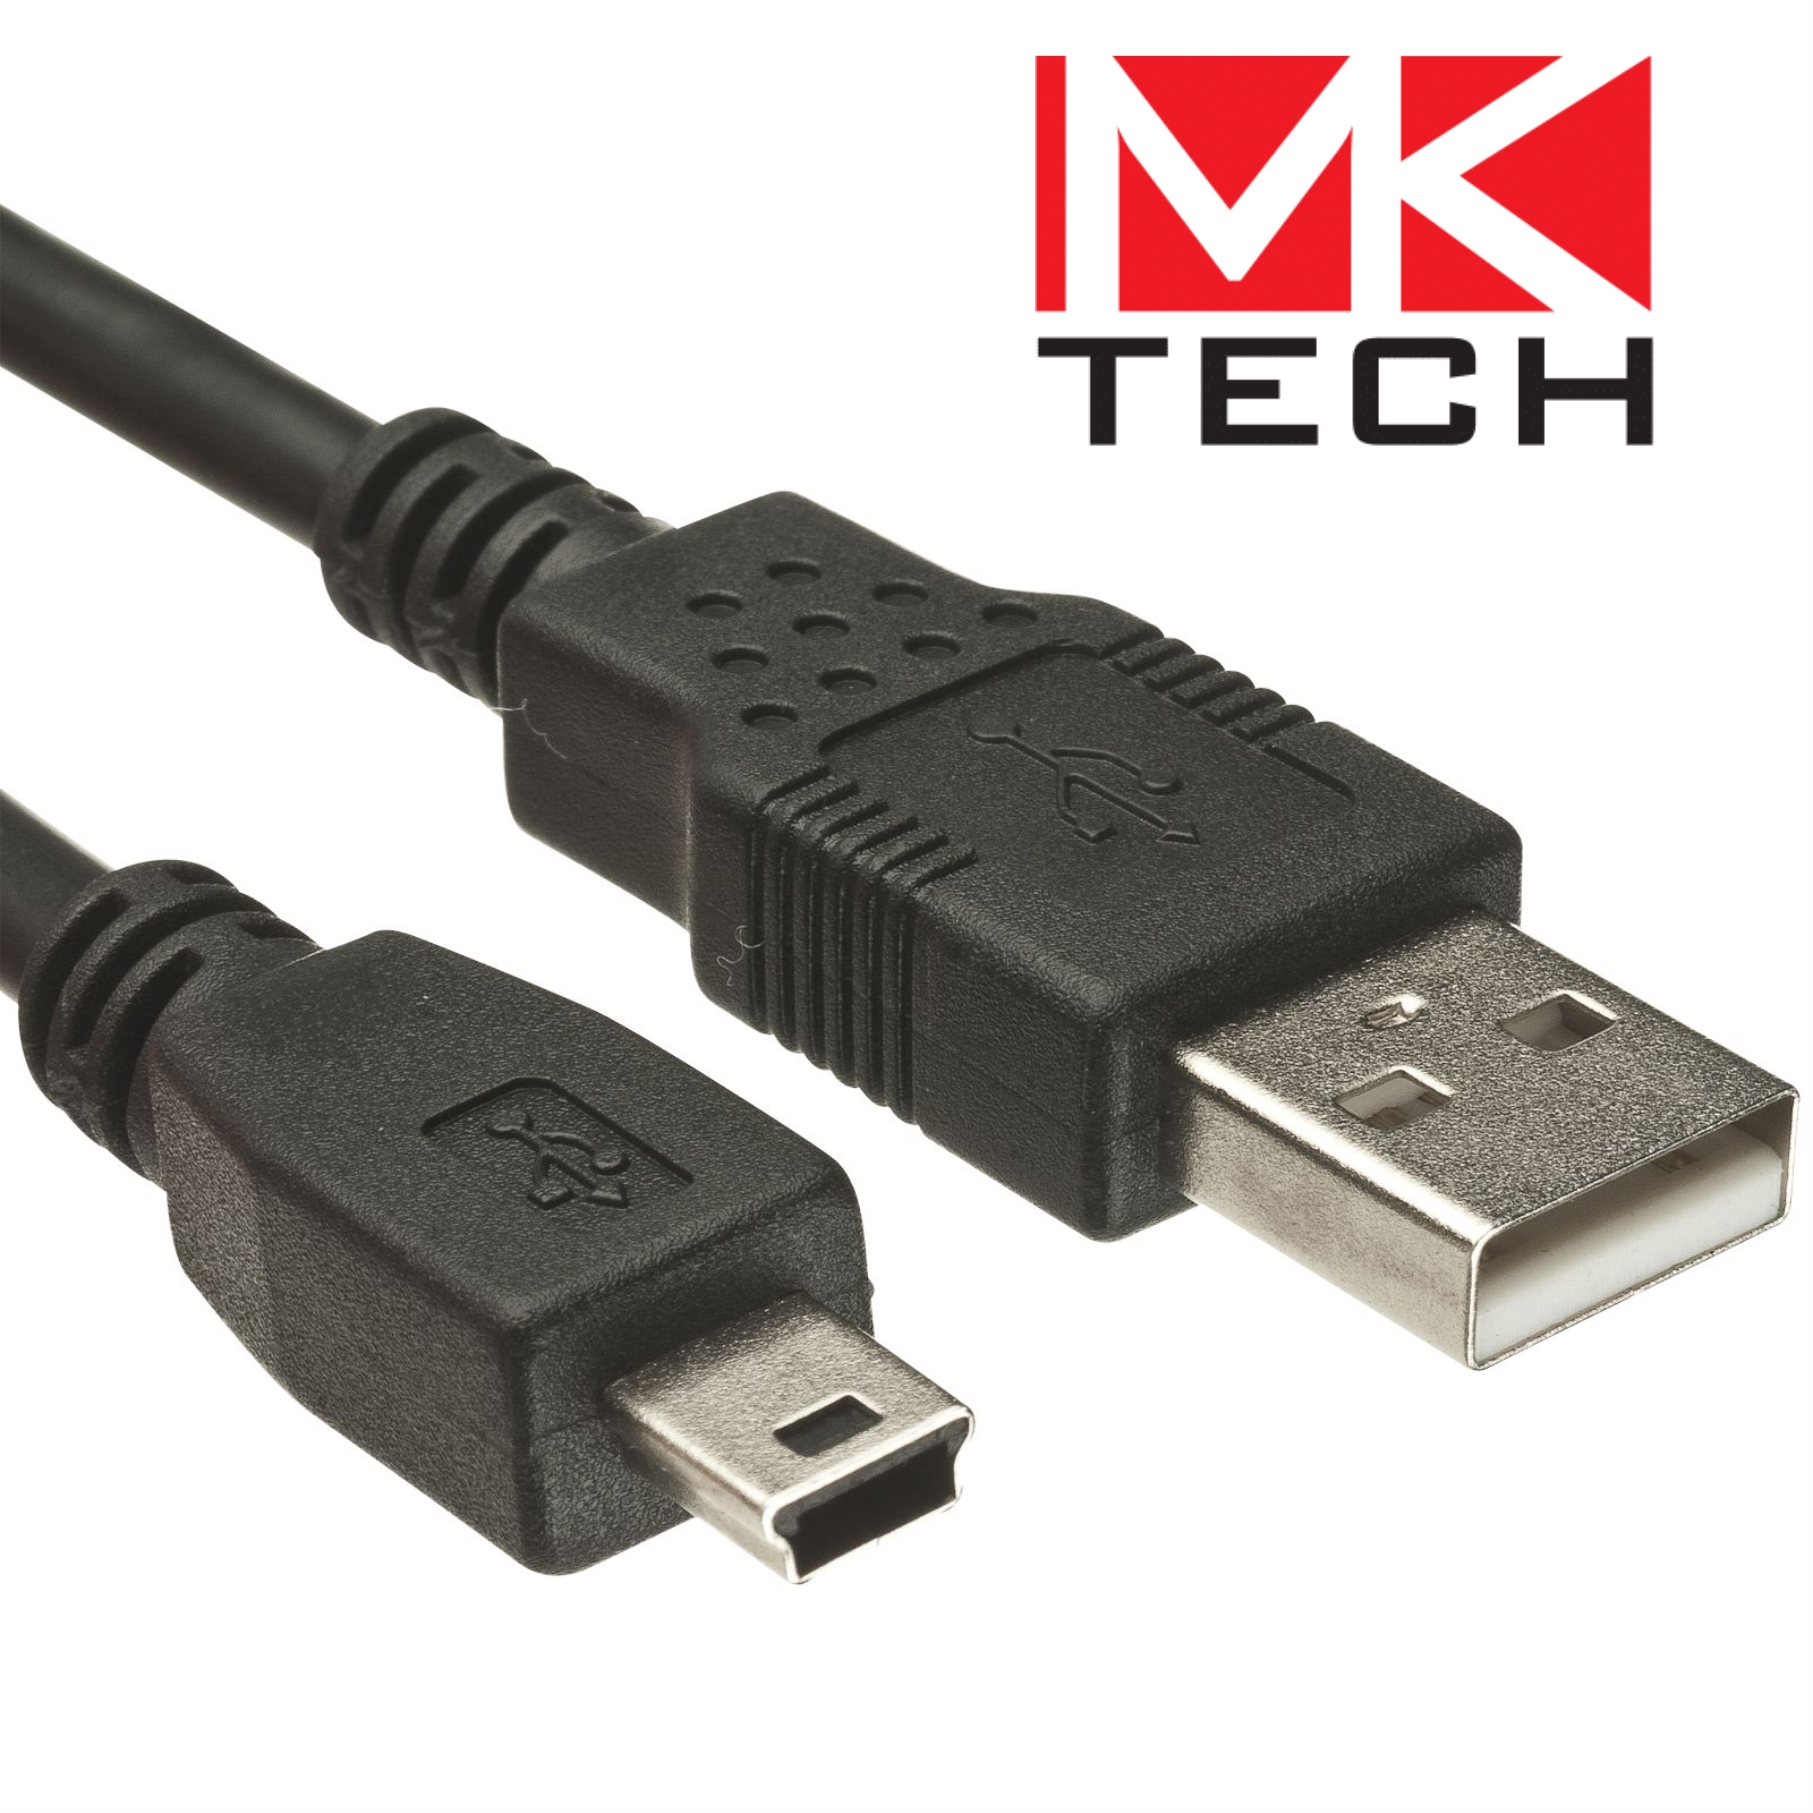 USB 2.0 (A Male to 5-pin Mini B Male)0.15m